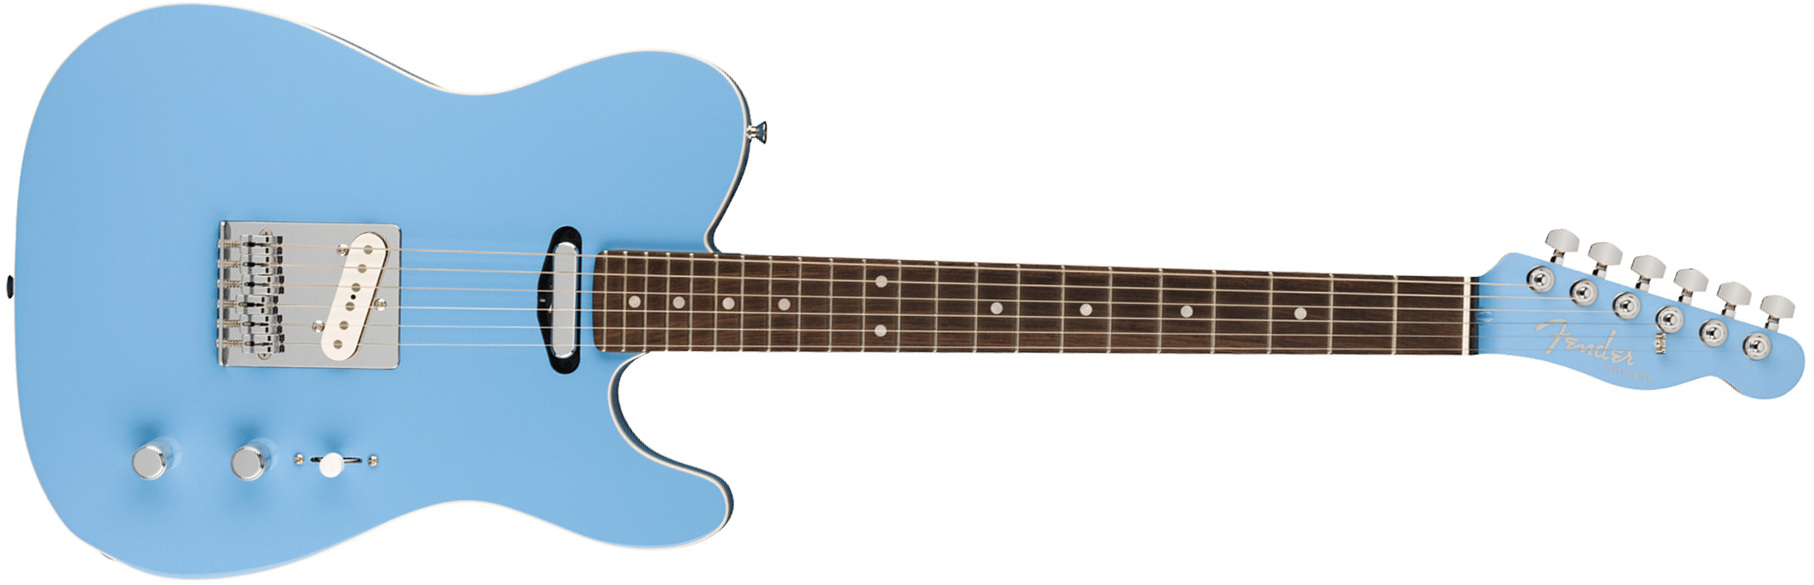 Fender Tele Aerodyne Special Jap 2s Ht Rw - California Blue - Tel shape electric guitar - Main picture